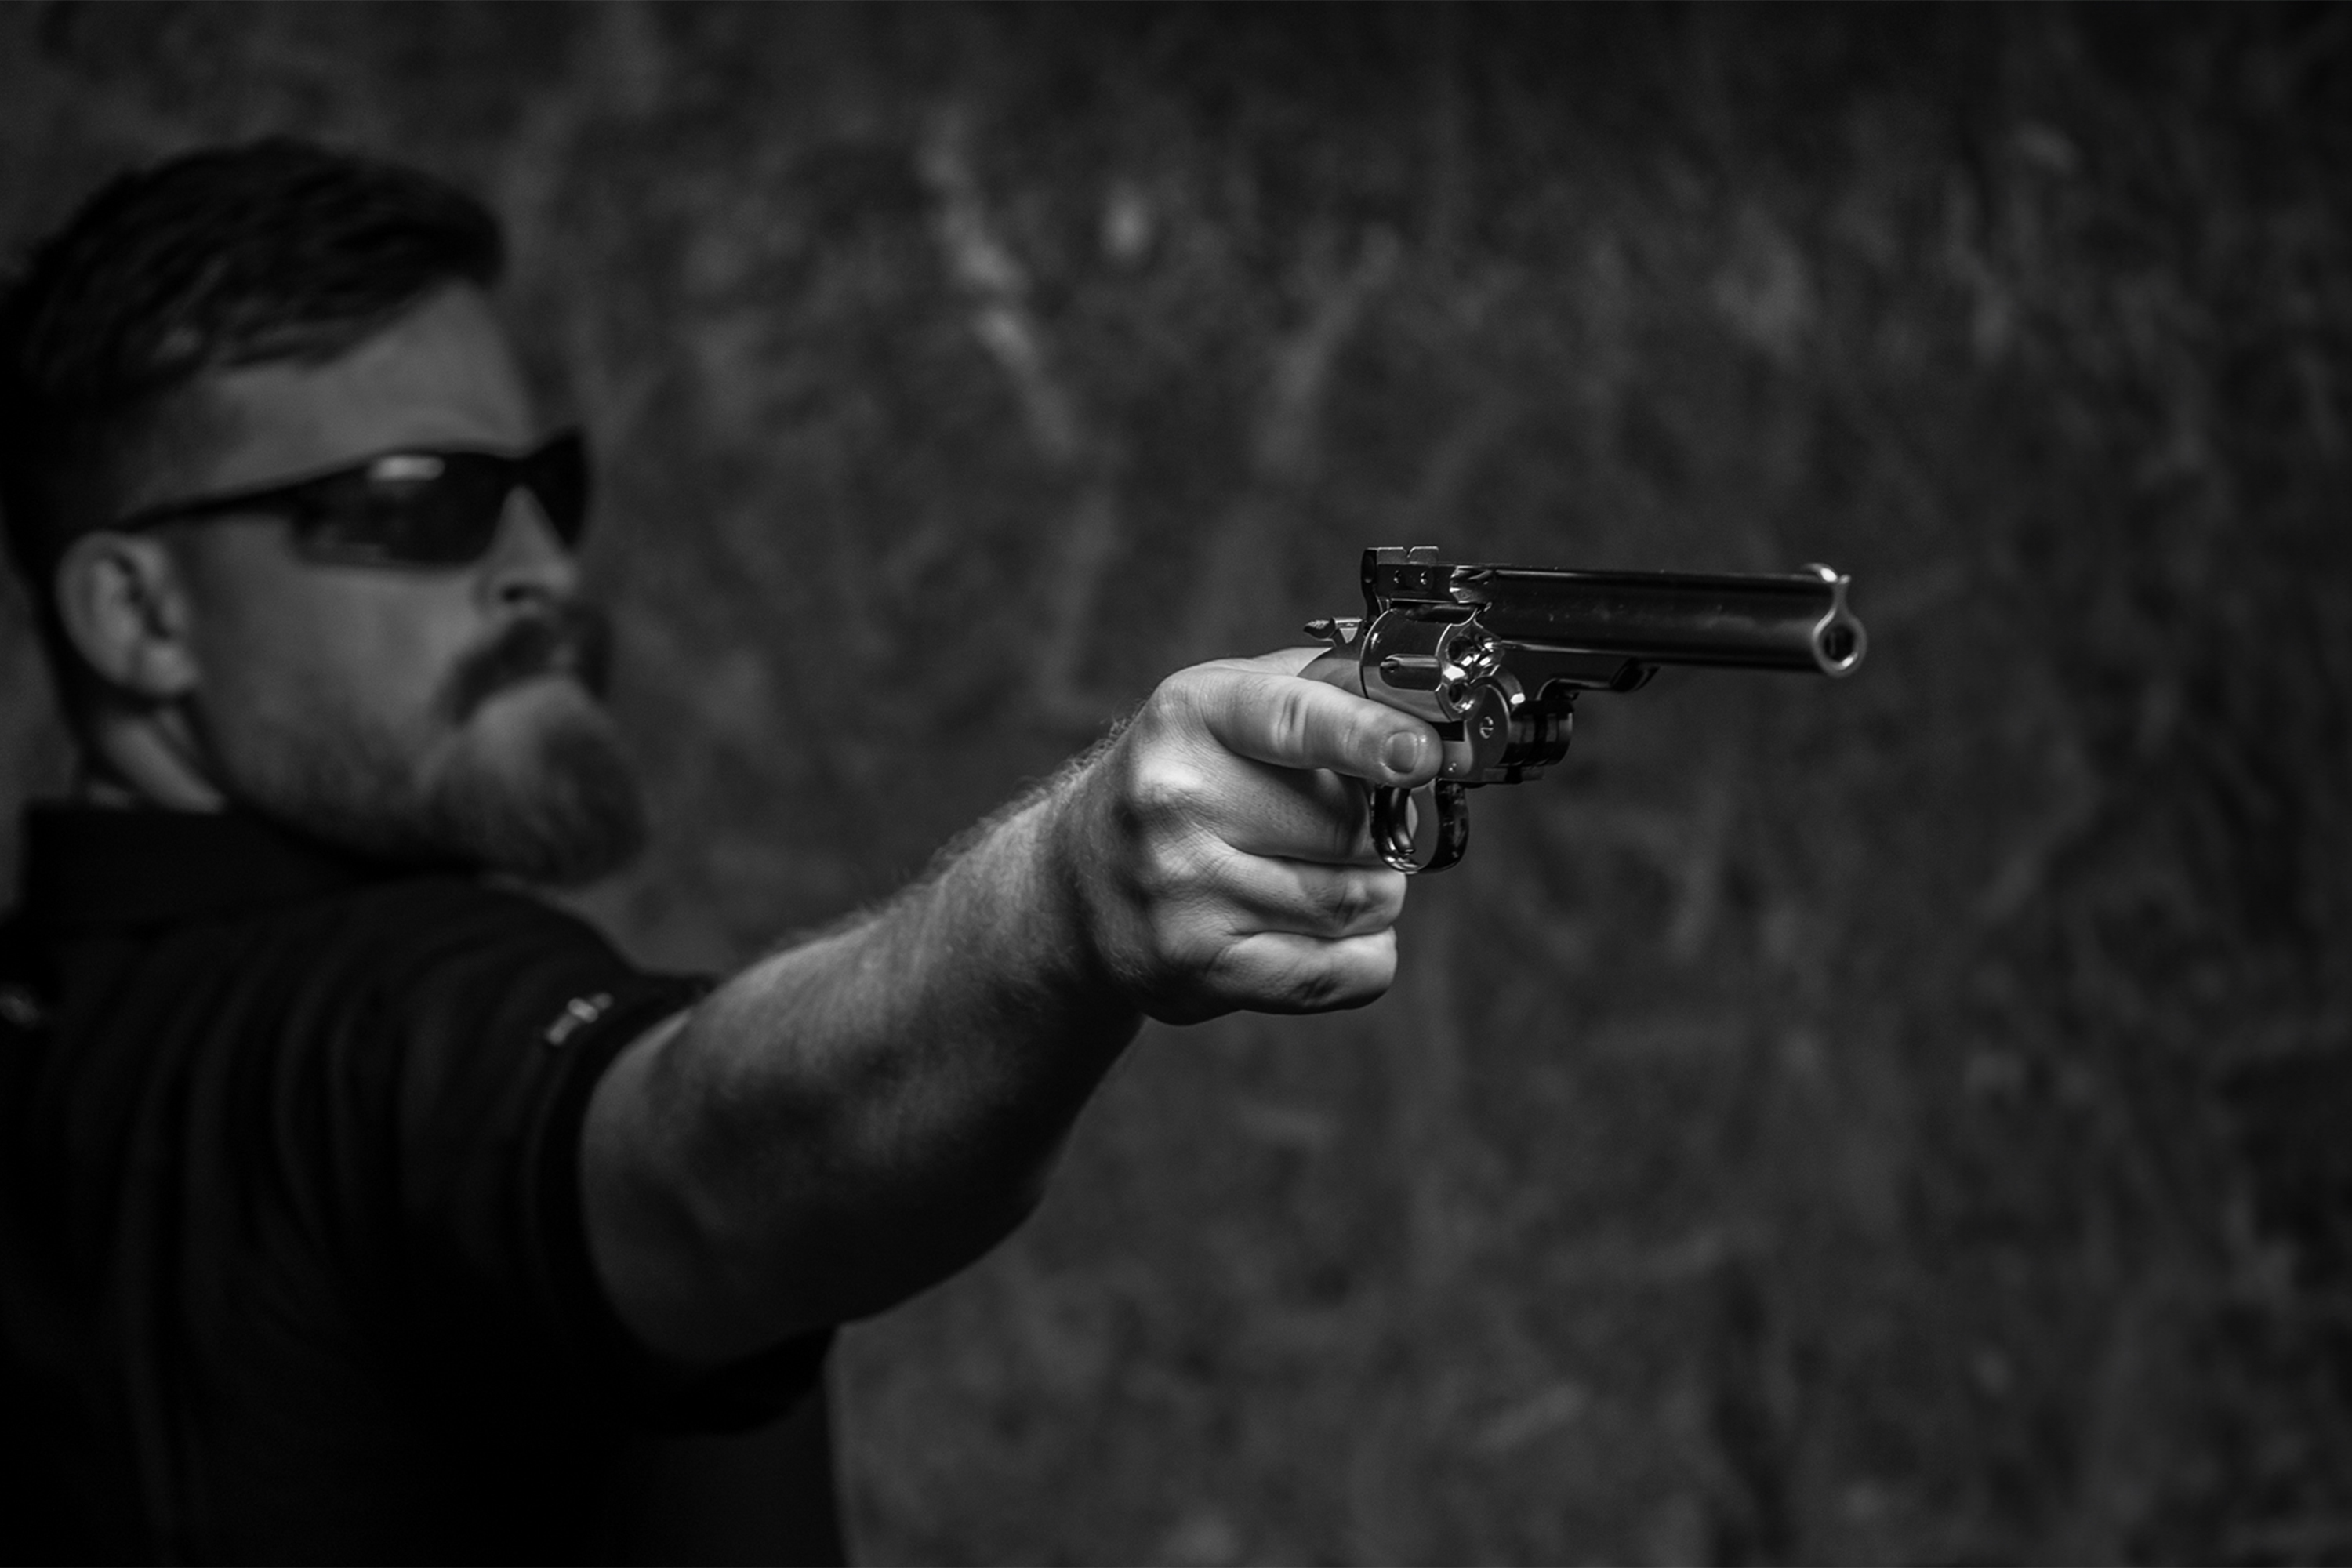 Schofield 6'' Revolver 4,5mm - Druckluft Co2 Non BlowBack